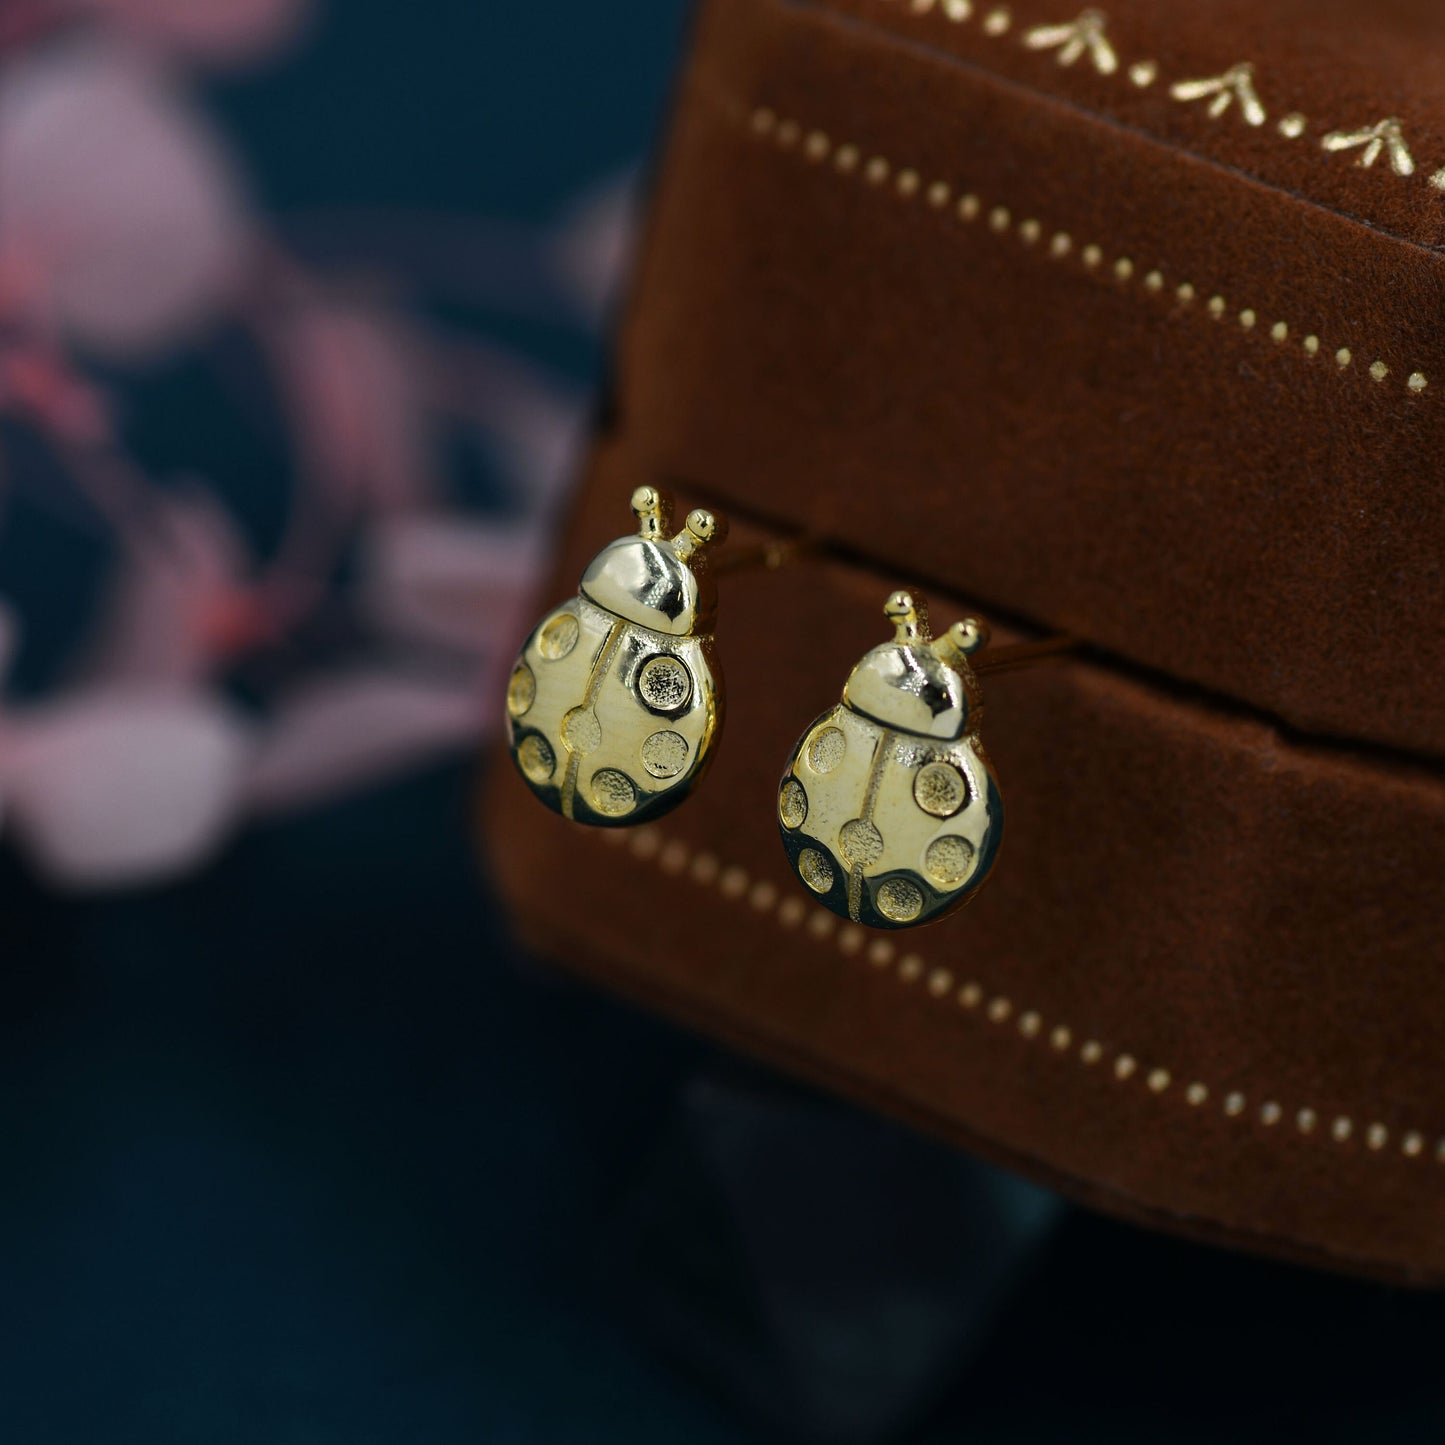 Cute Little Ladybird Stud Earrings in Sterling Silver, Silver or Gold, Nature Inspired Animal Earrings, Ladybug Earrings